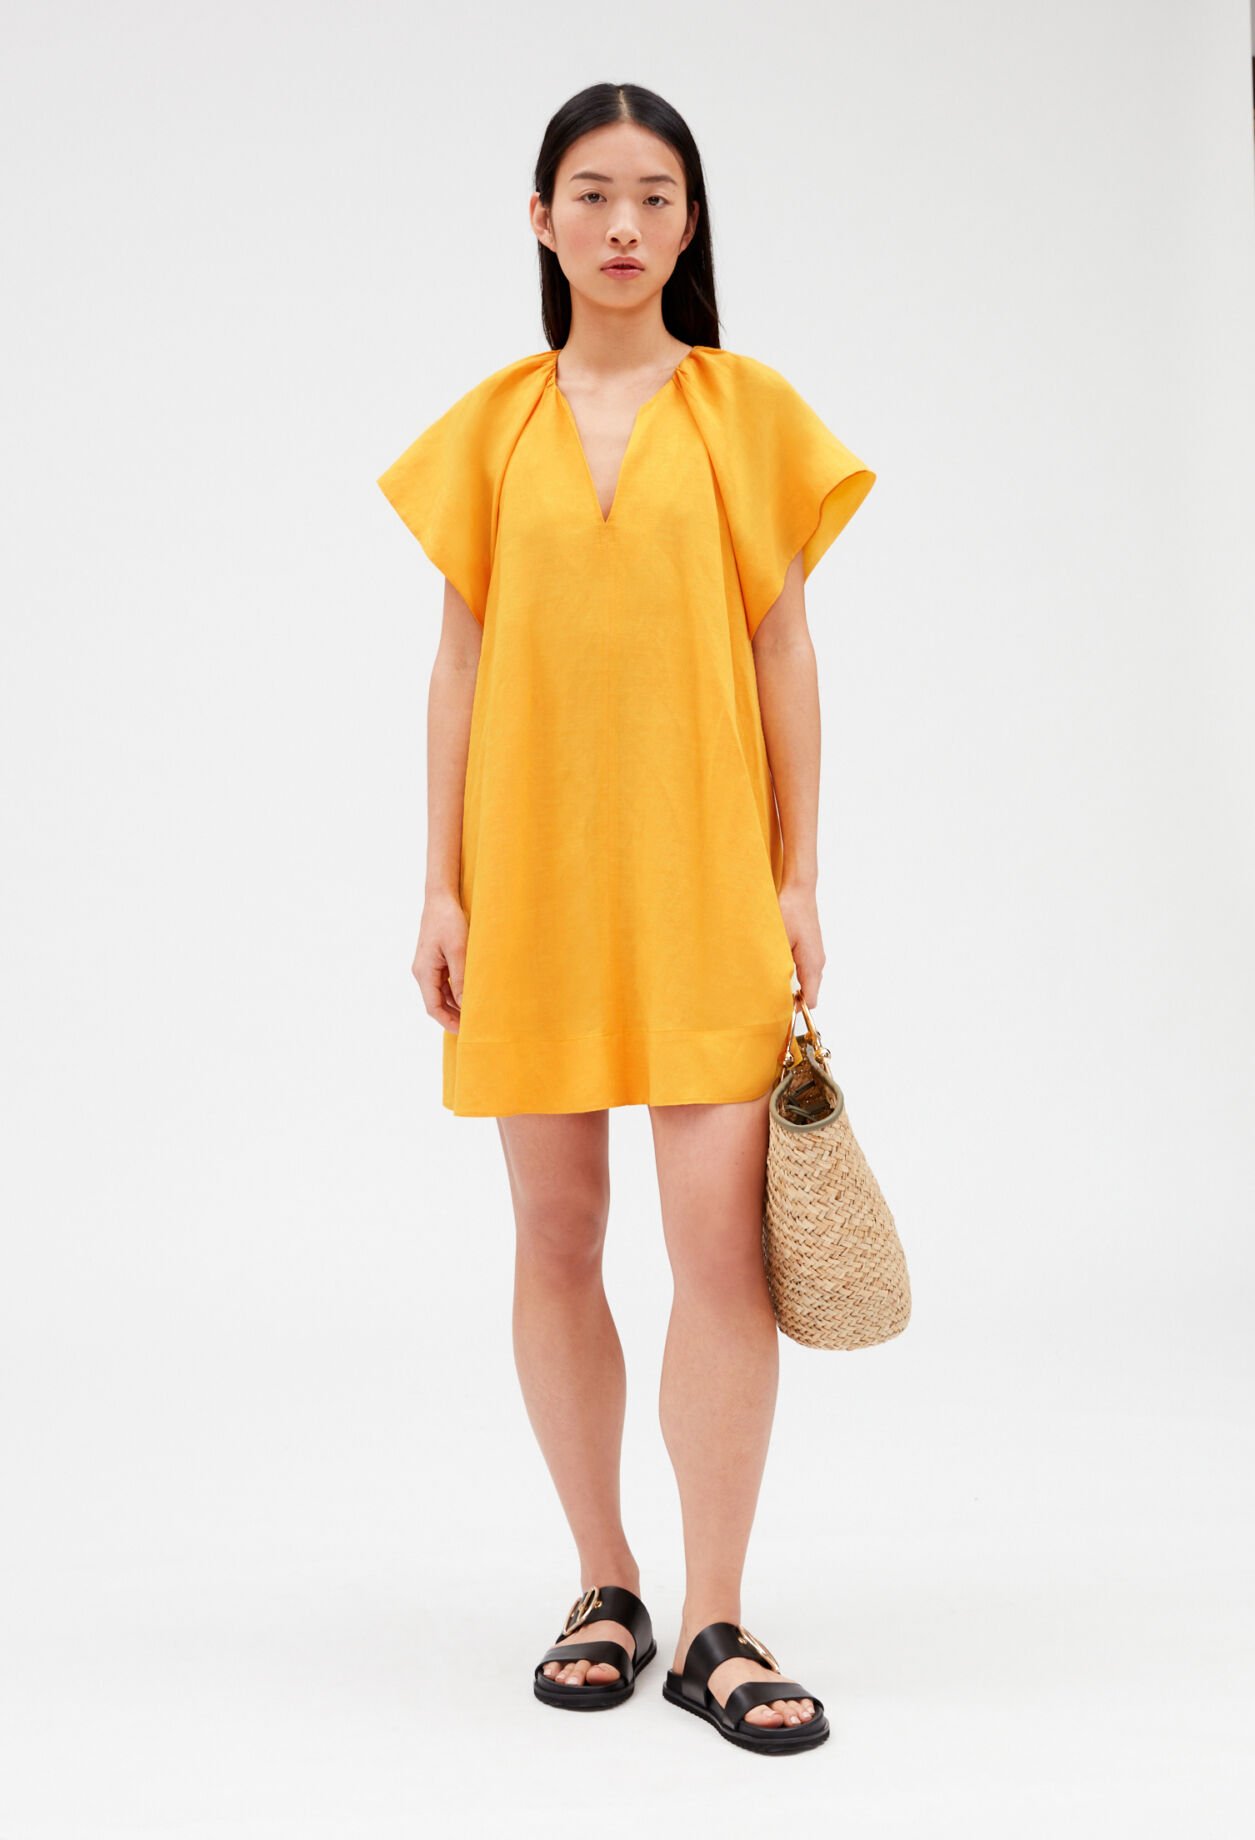 Short yellow dress